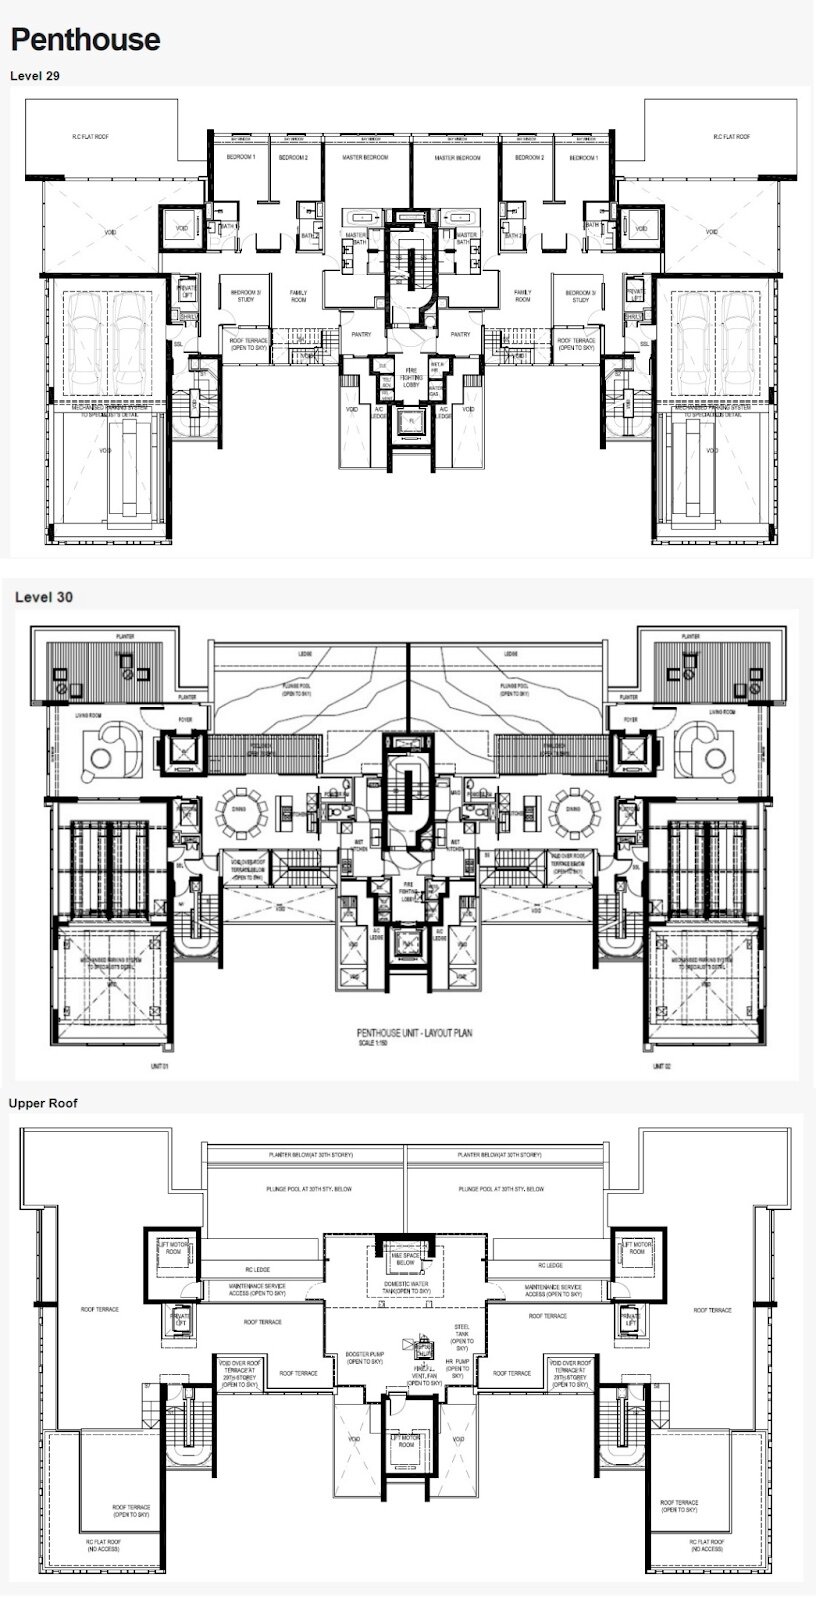 reignwood-hamilton-scotts-penthouse-floor-plan.jpg